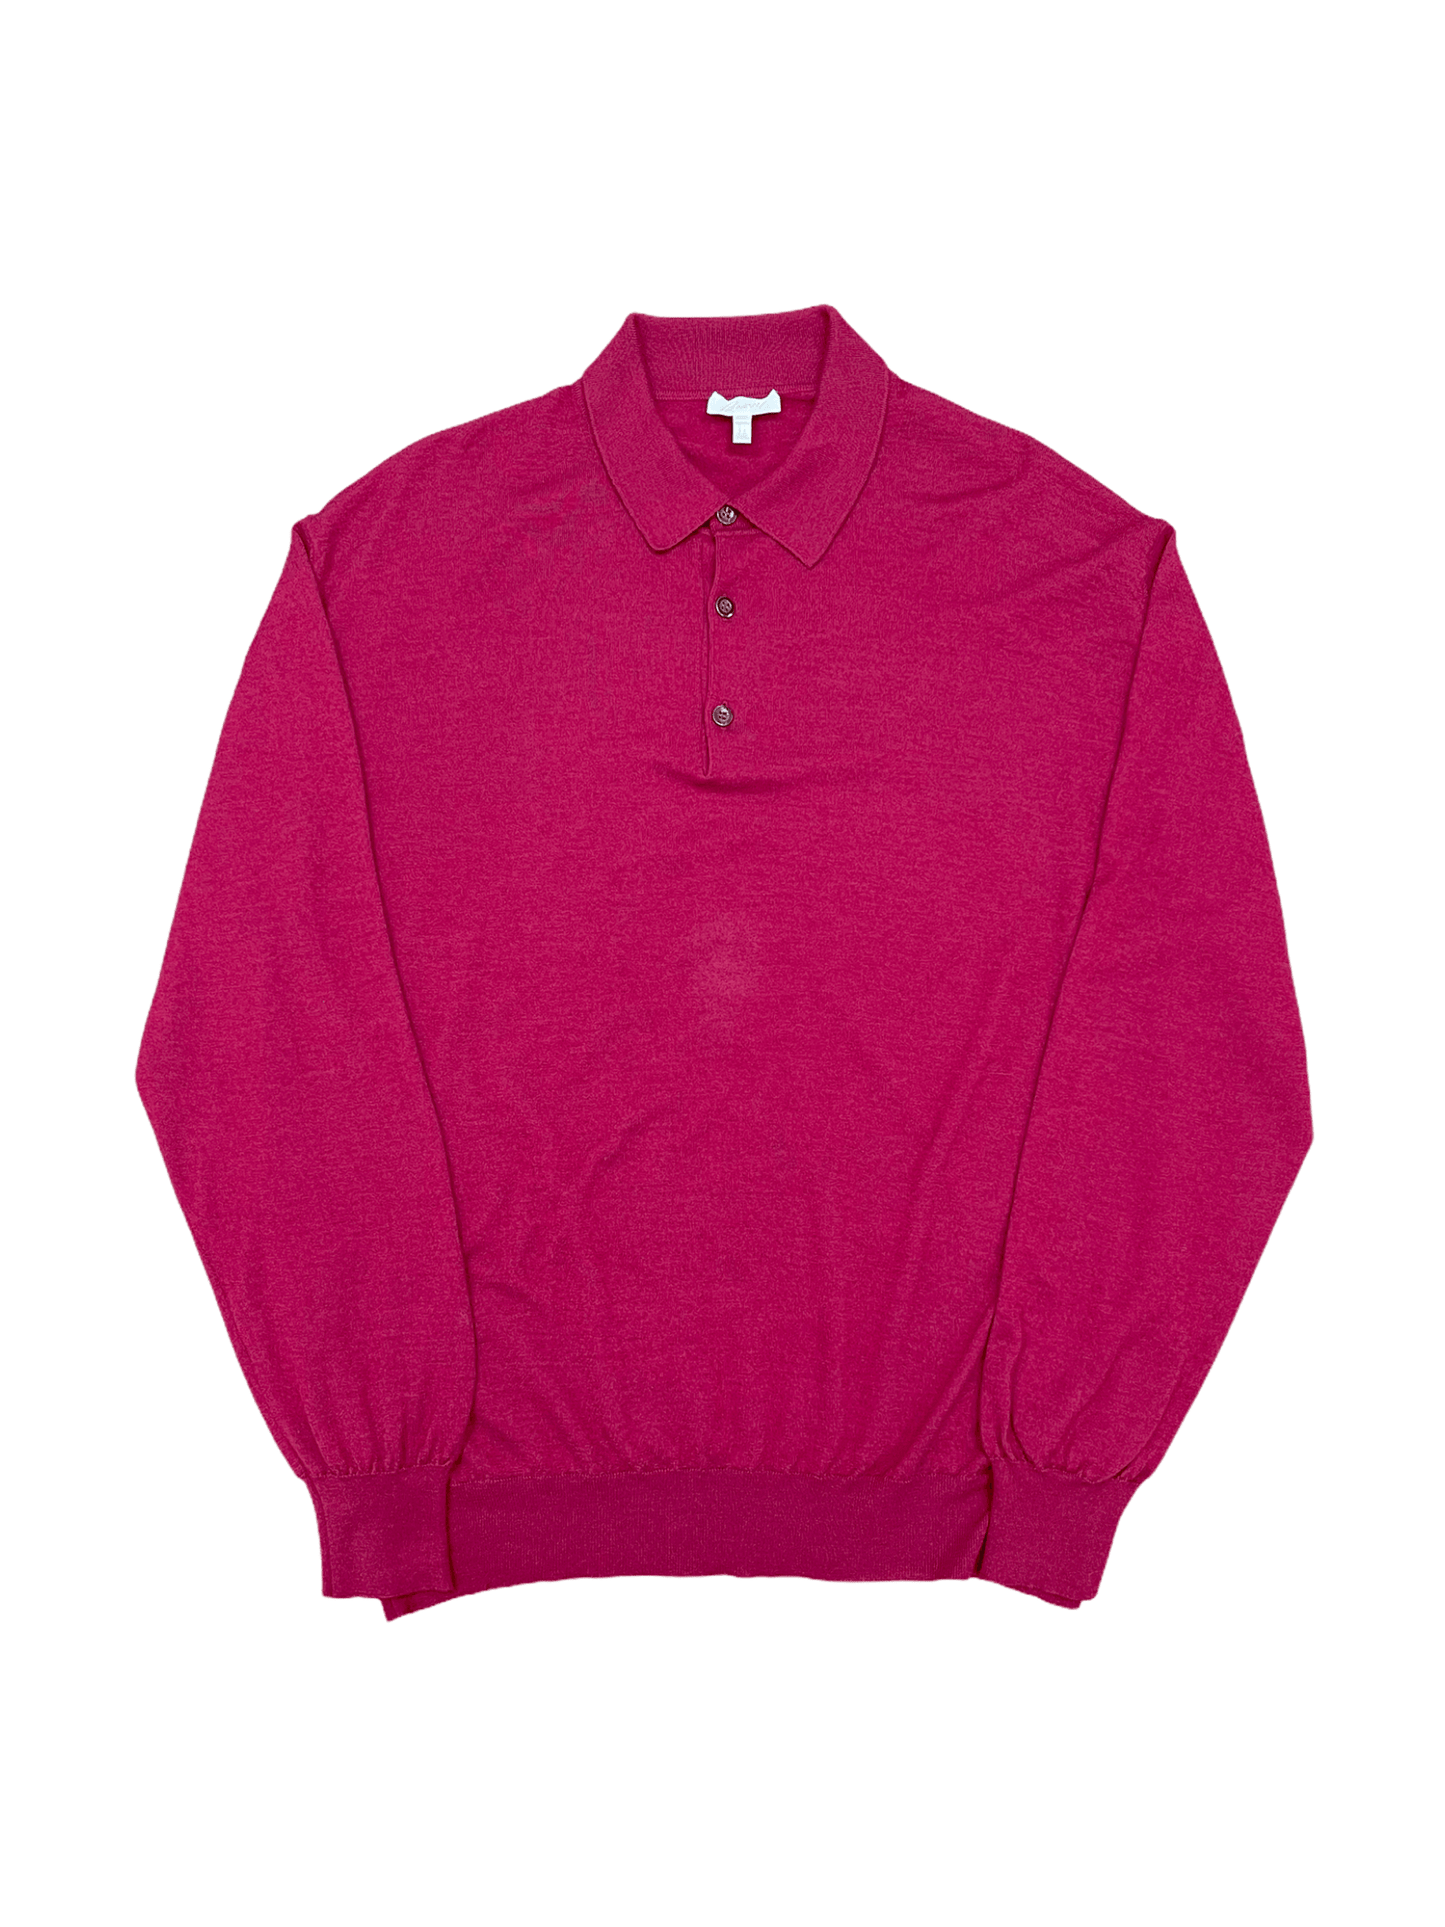 Brioni Merlot Crimson Red Cashmere Long Sleeve Polo Sweater—Genuine Design luxury consignment